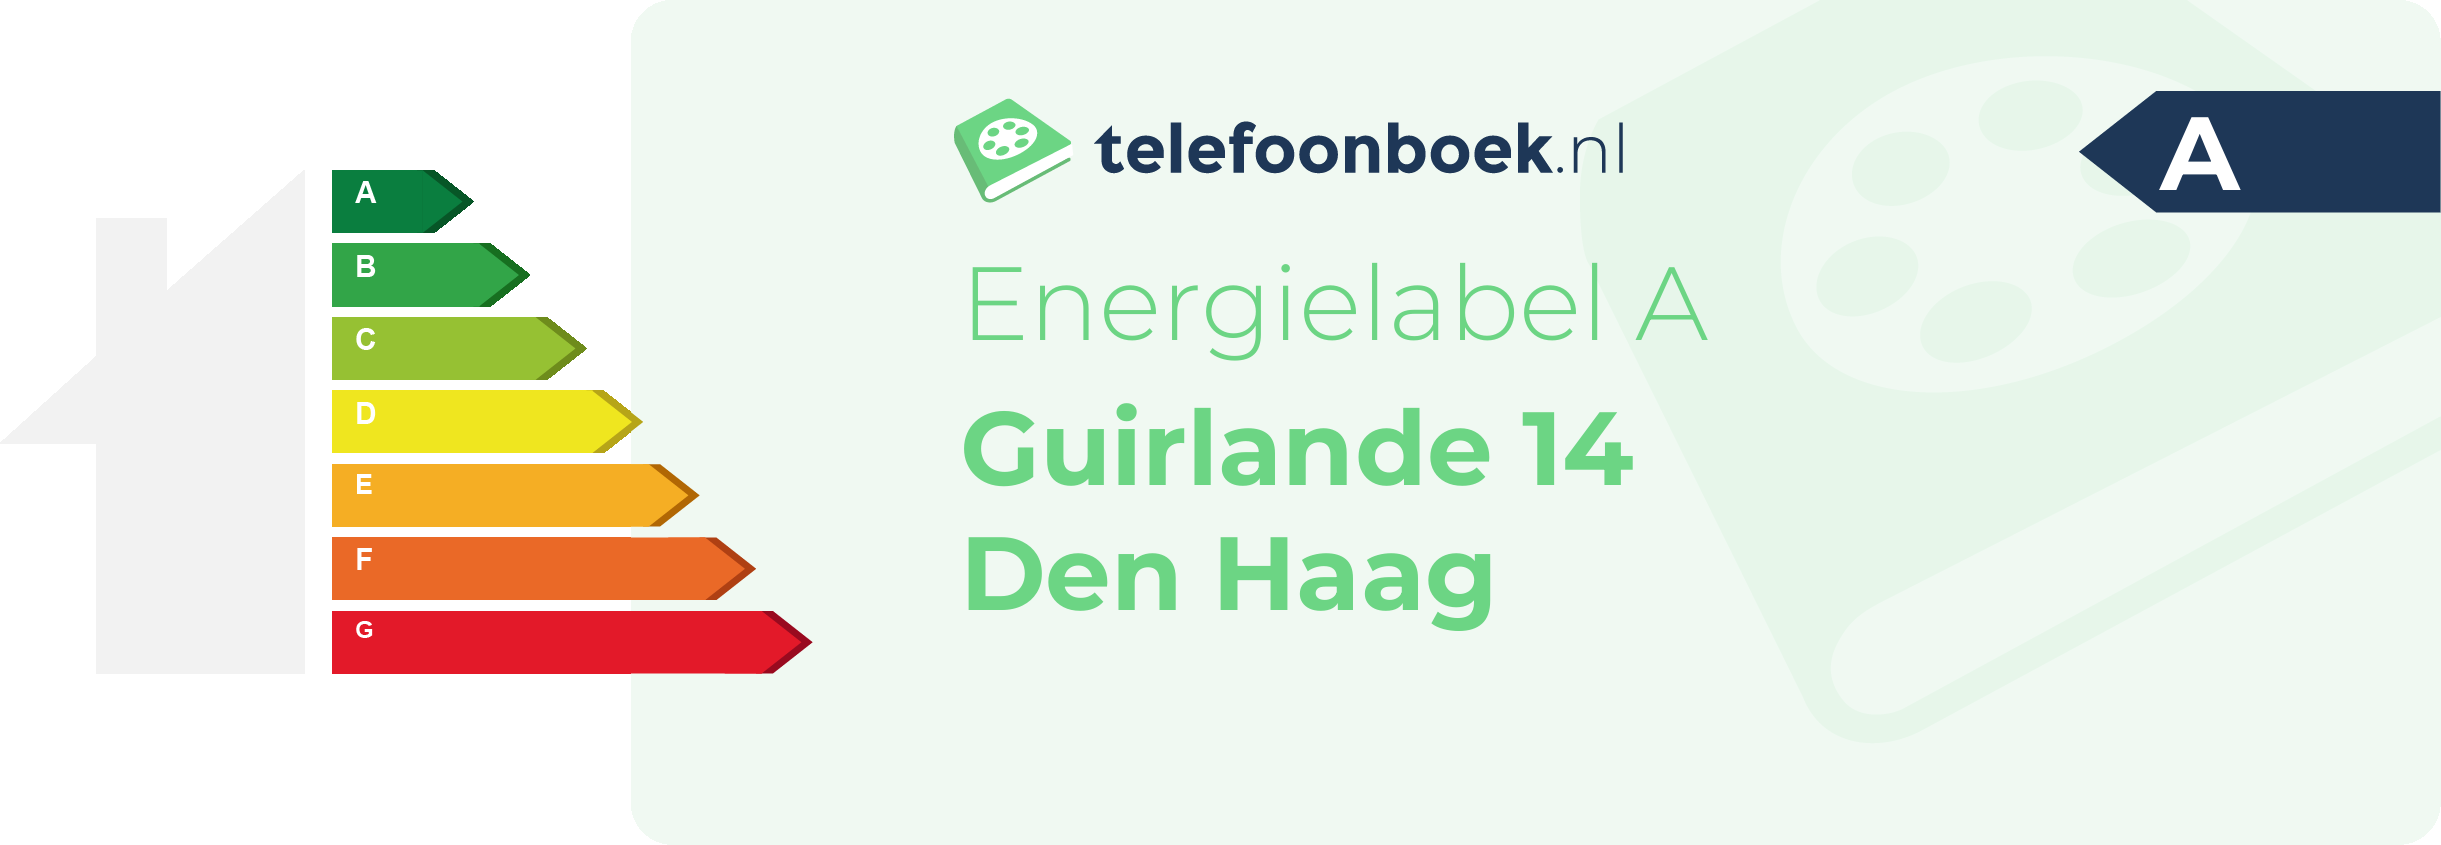 Energielabel Guirlande 14 Den Haag